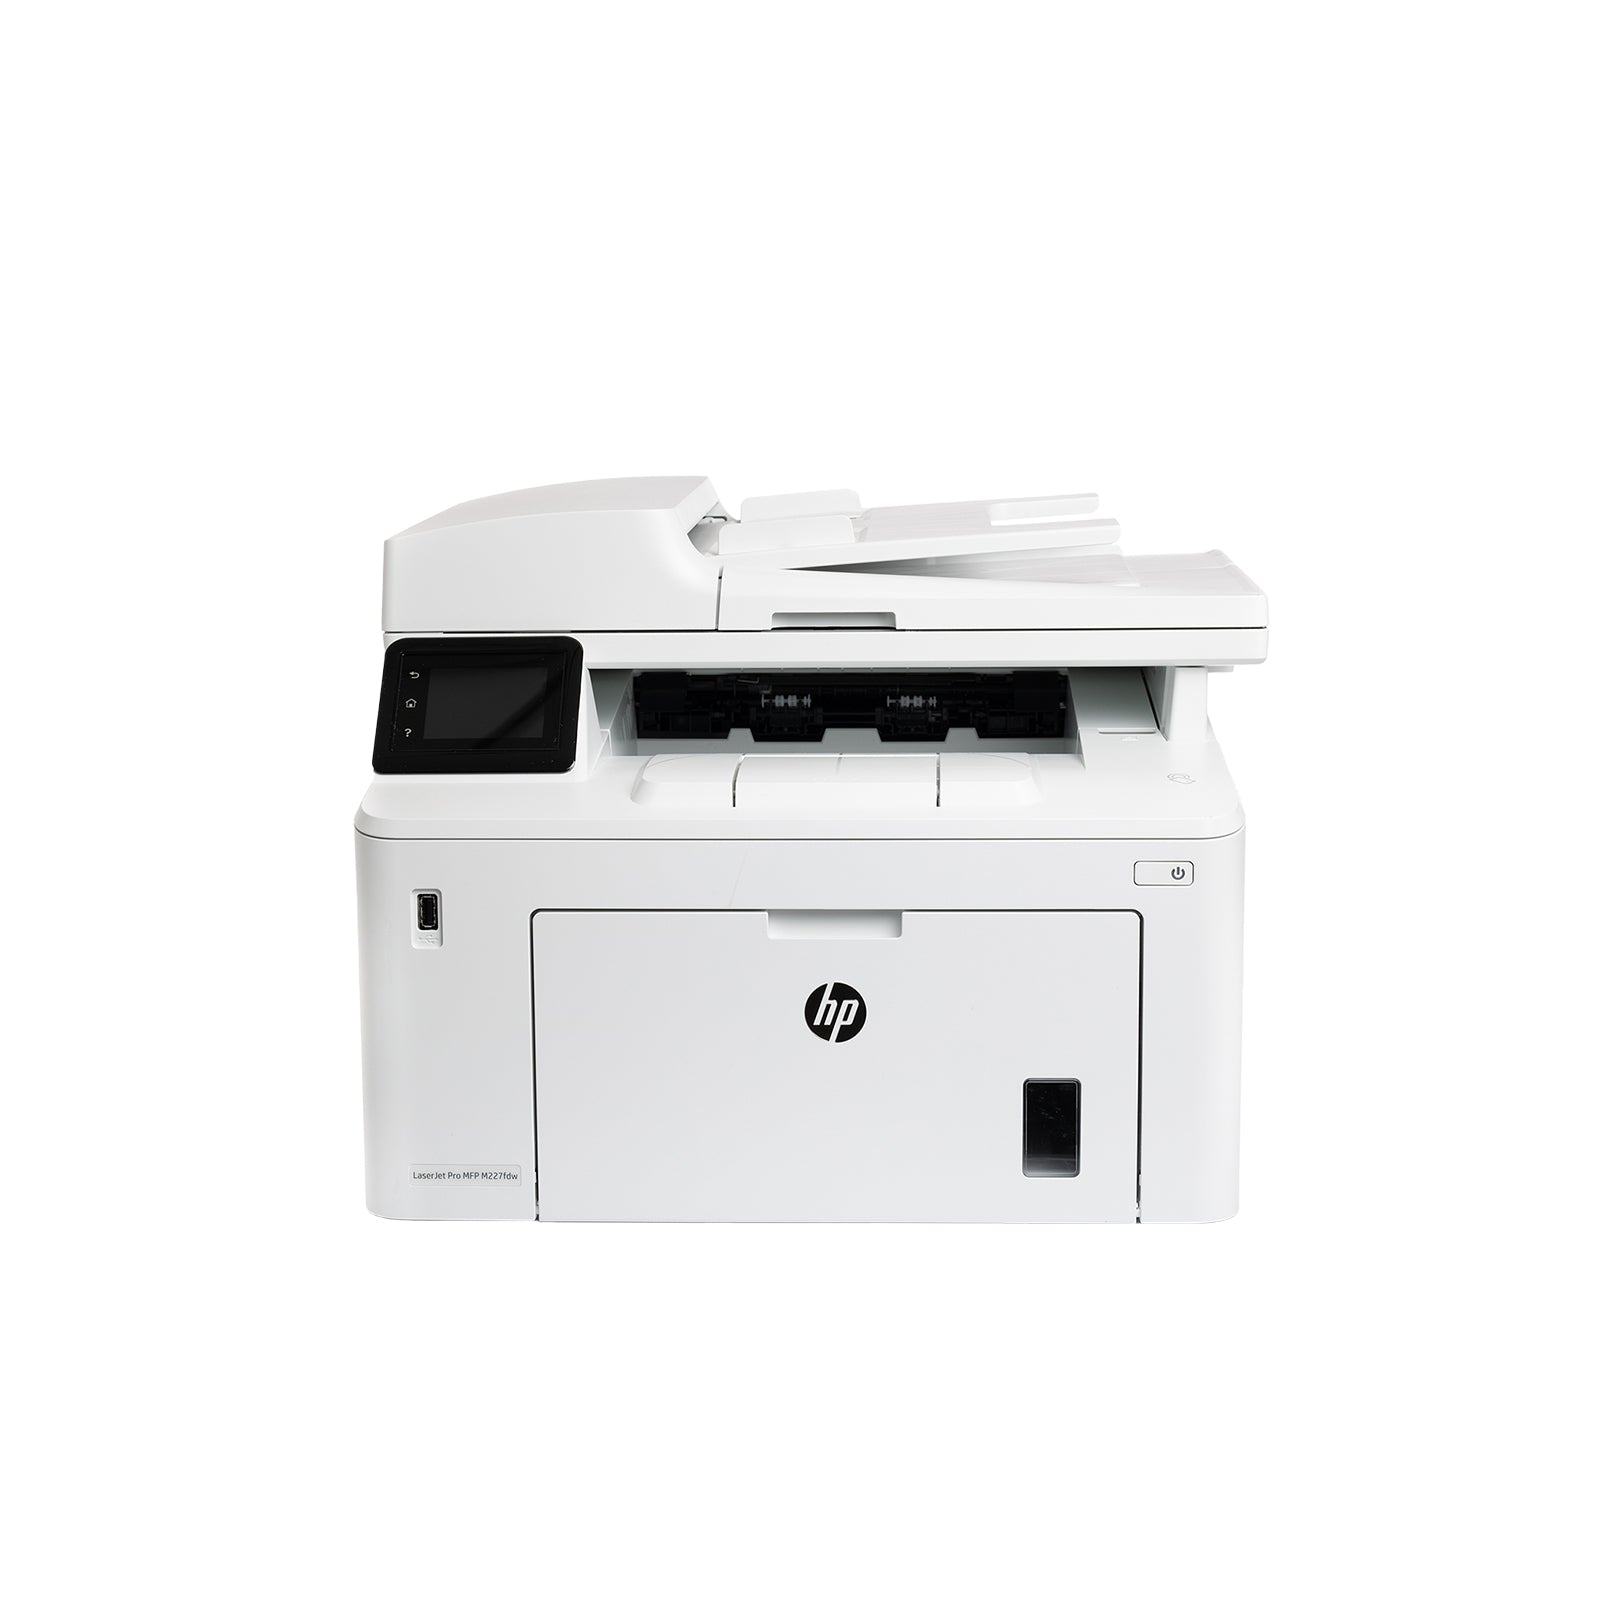 HP LaserJet Pro MFP M227fdw Printer G3Q75A Refurbished